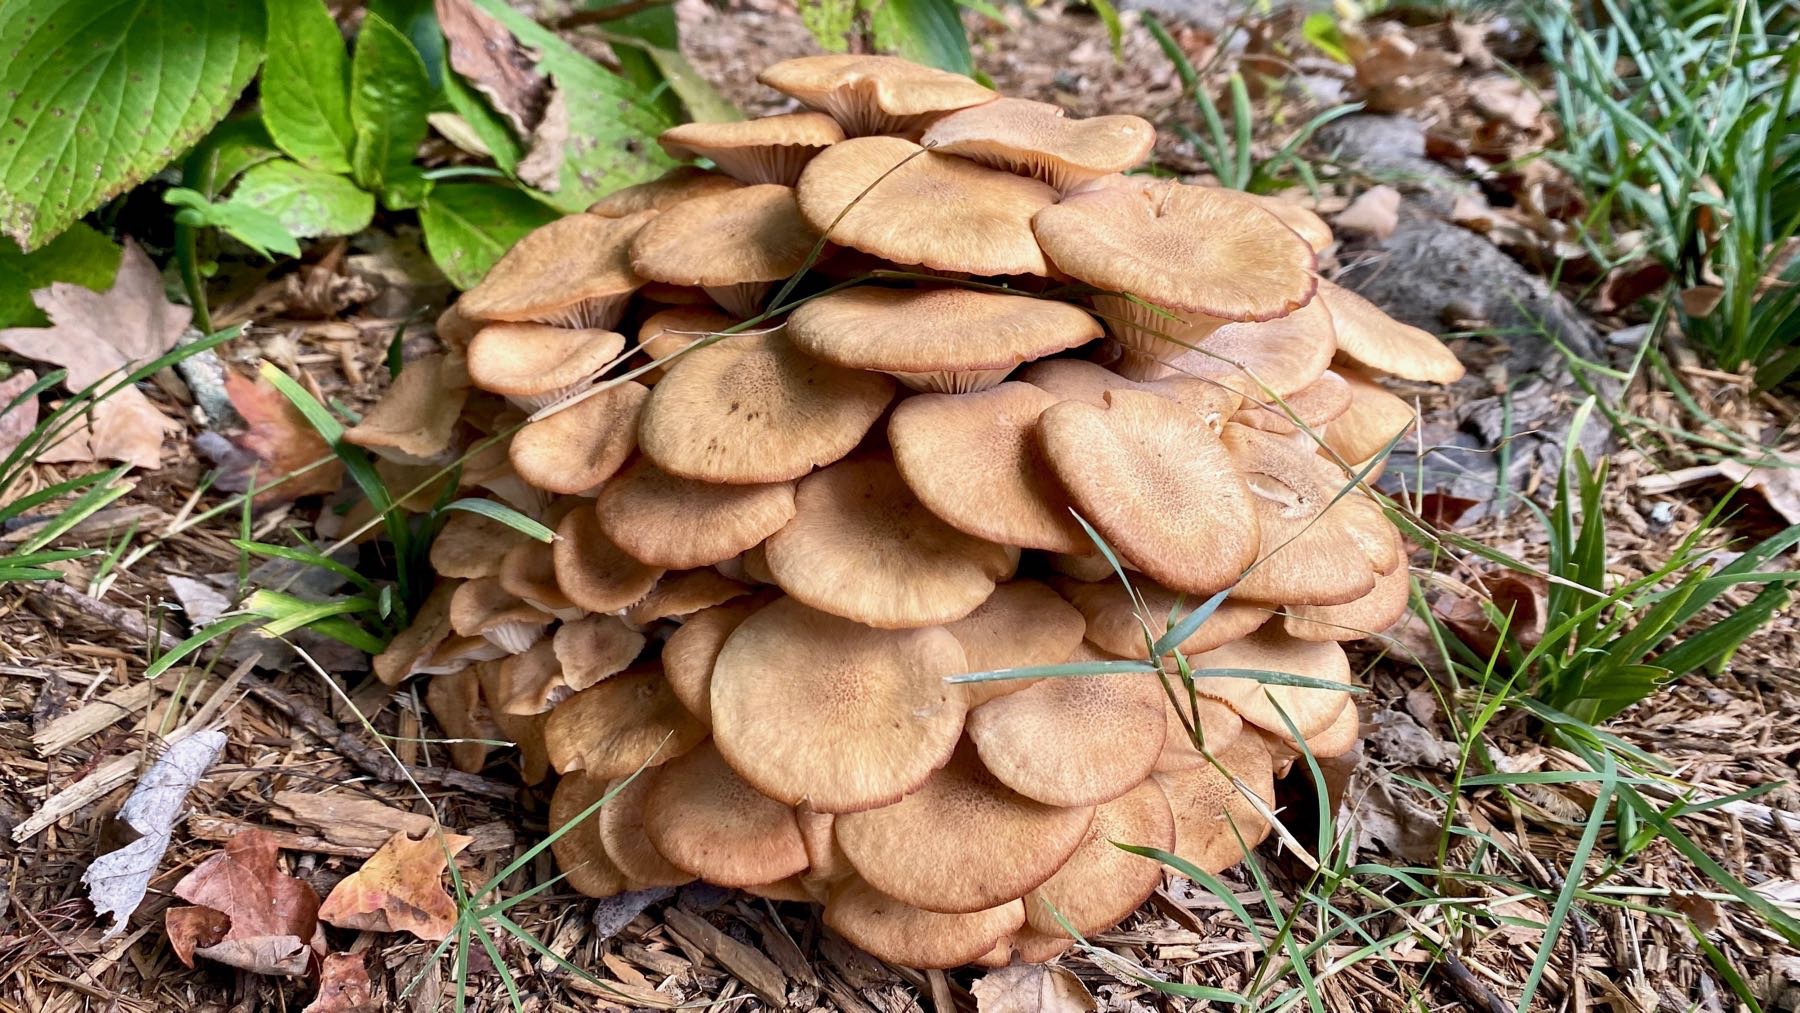 Fungal pile